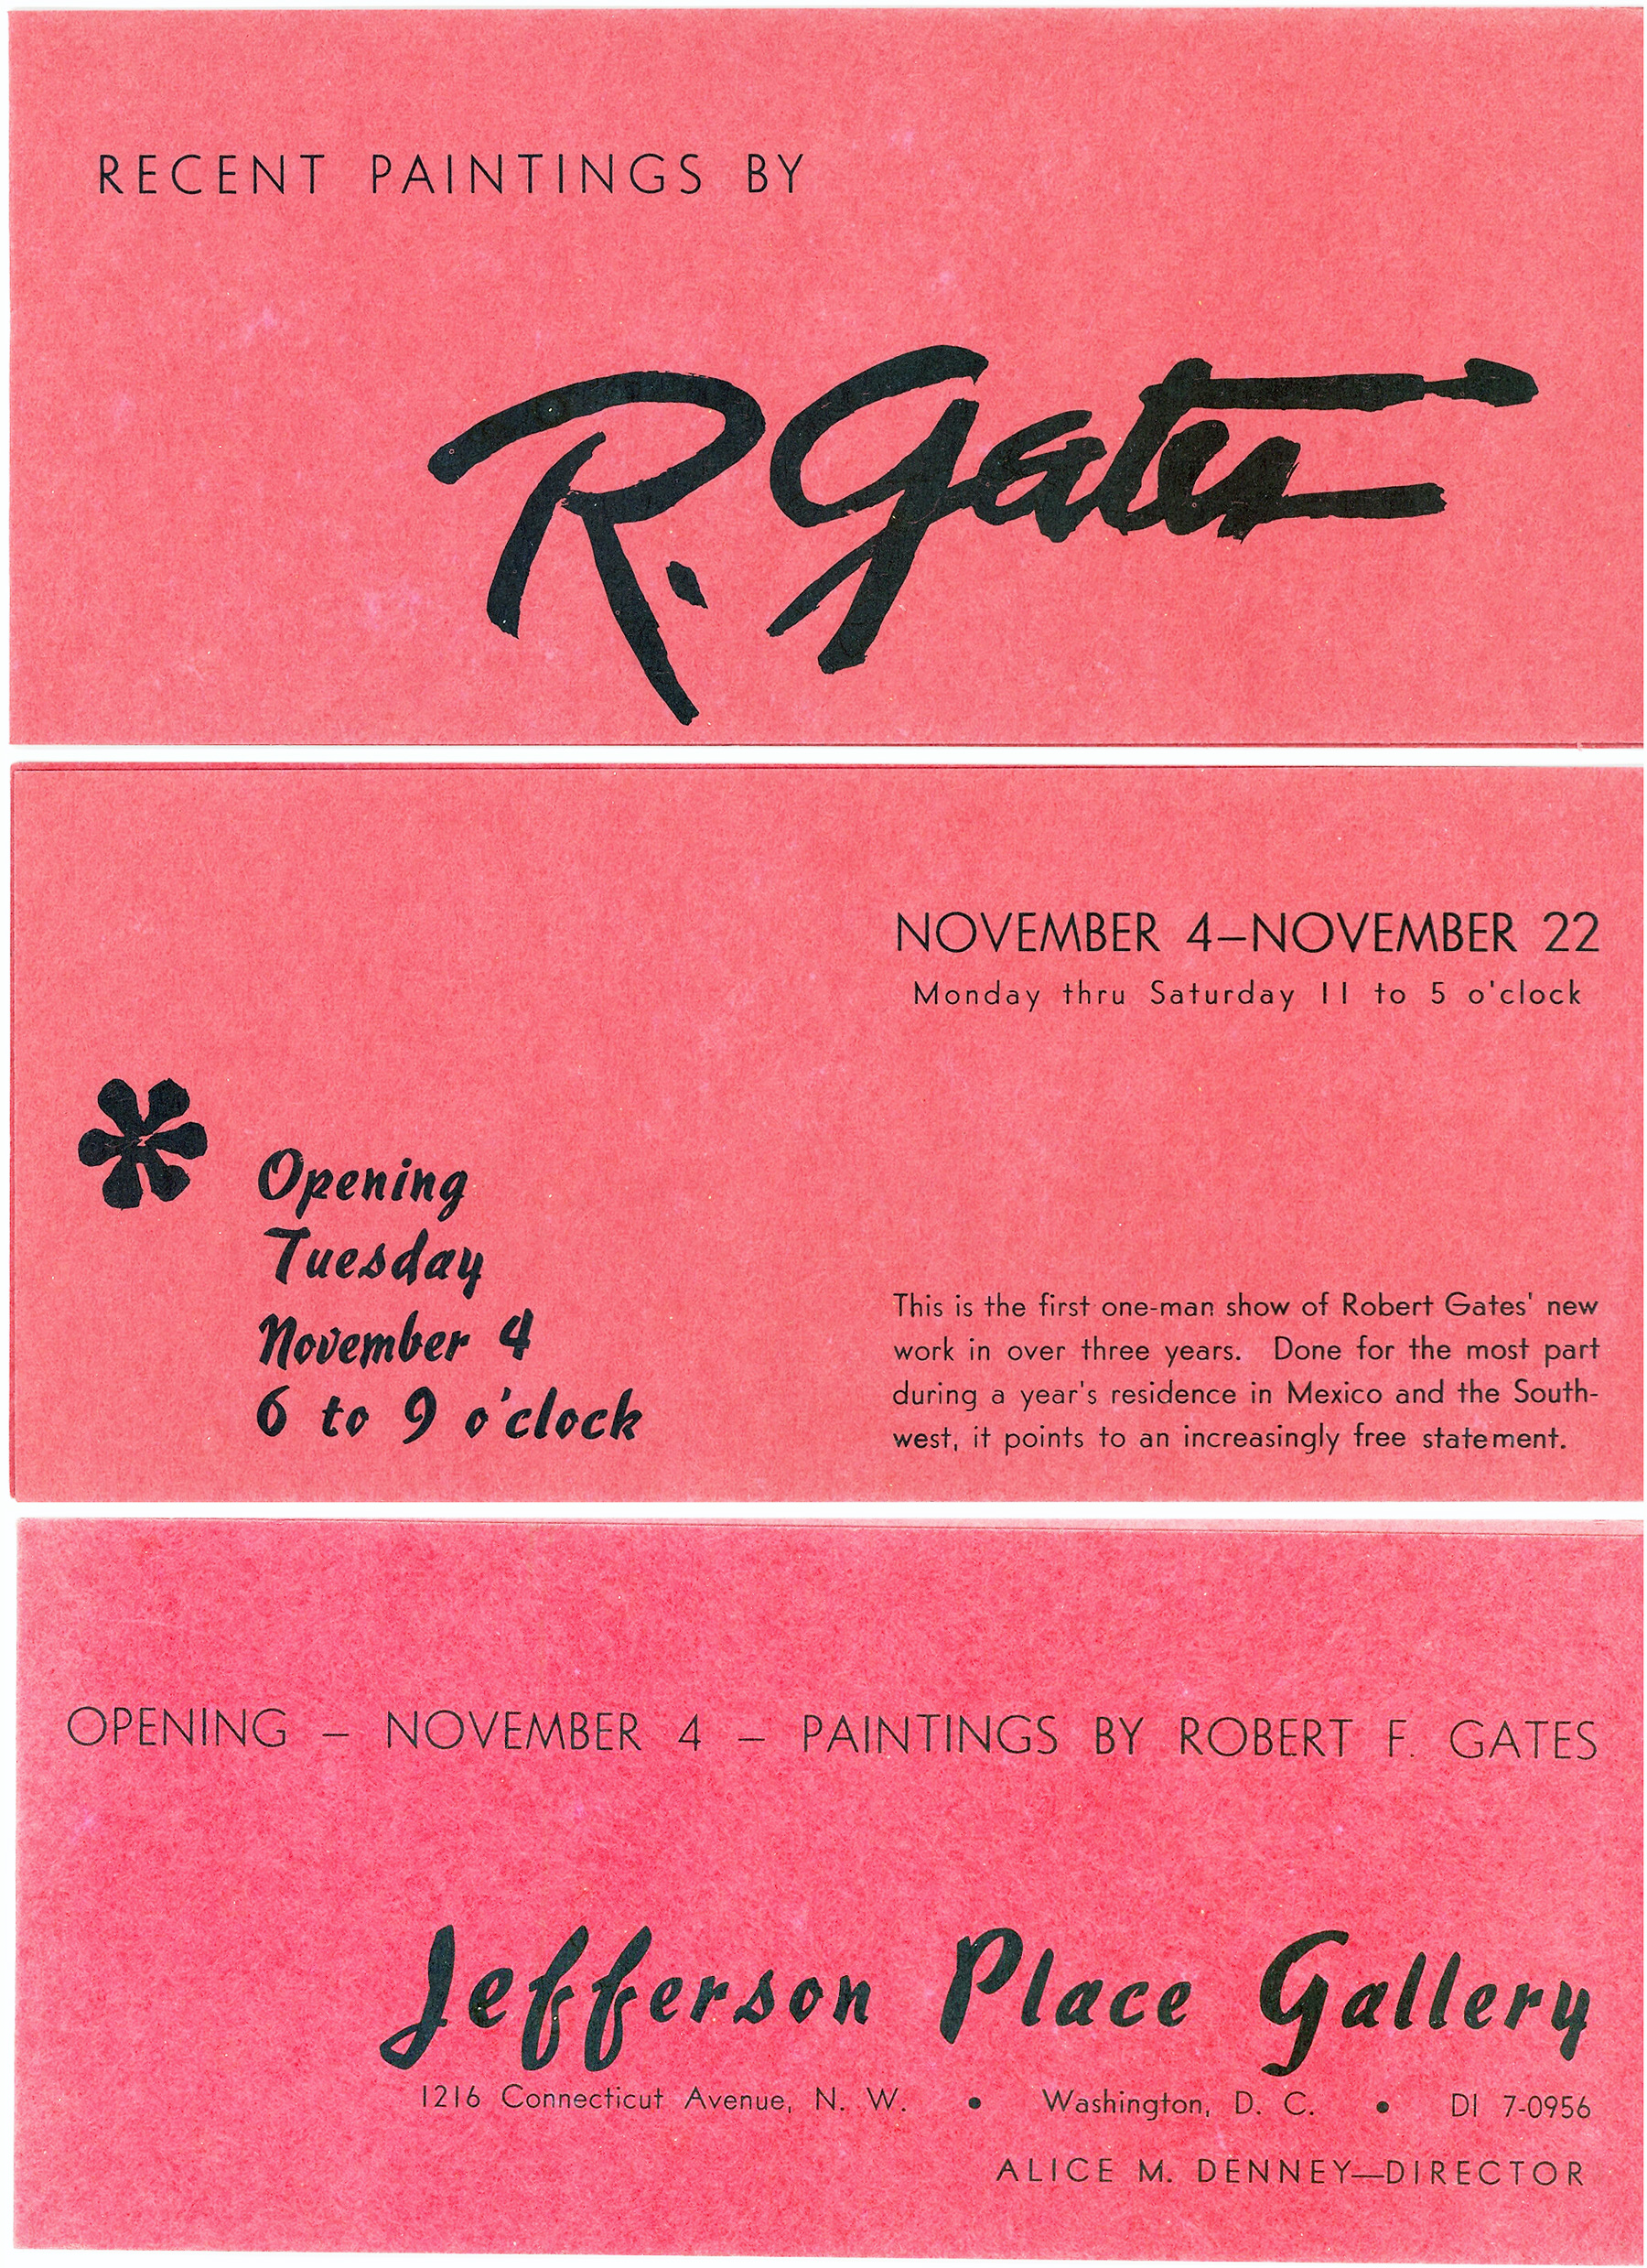 Announcement card for Robert Gates 